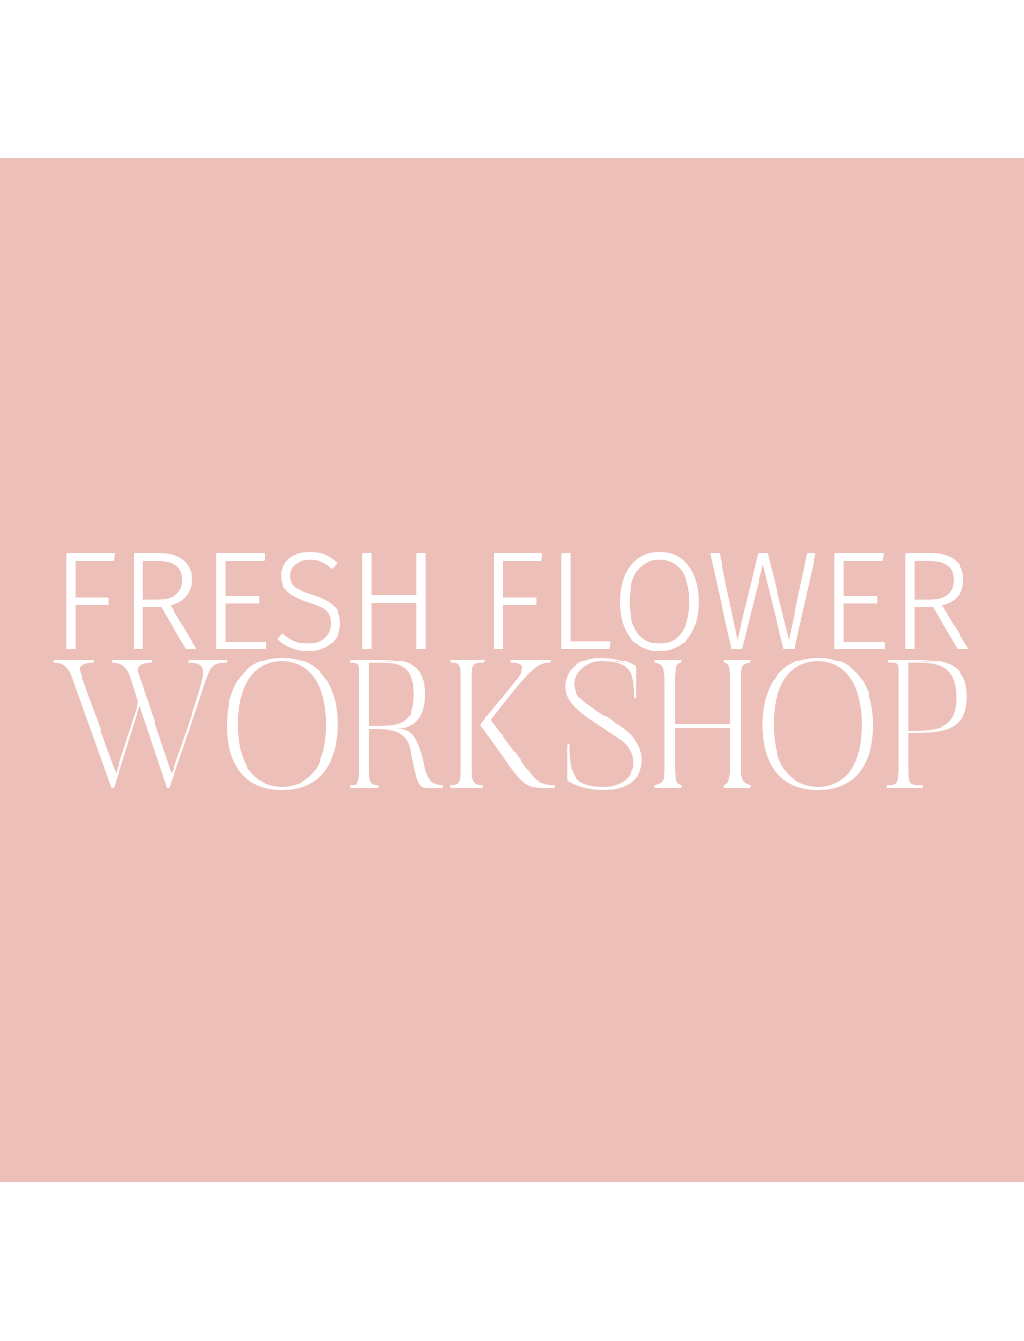 Fresh flower workshop